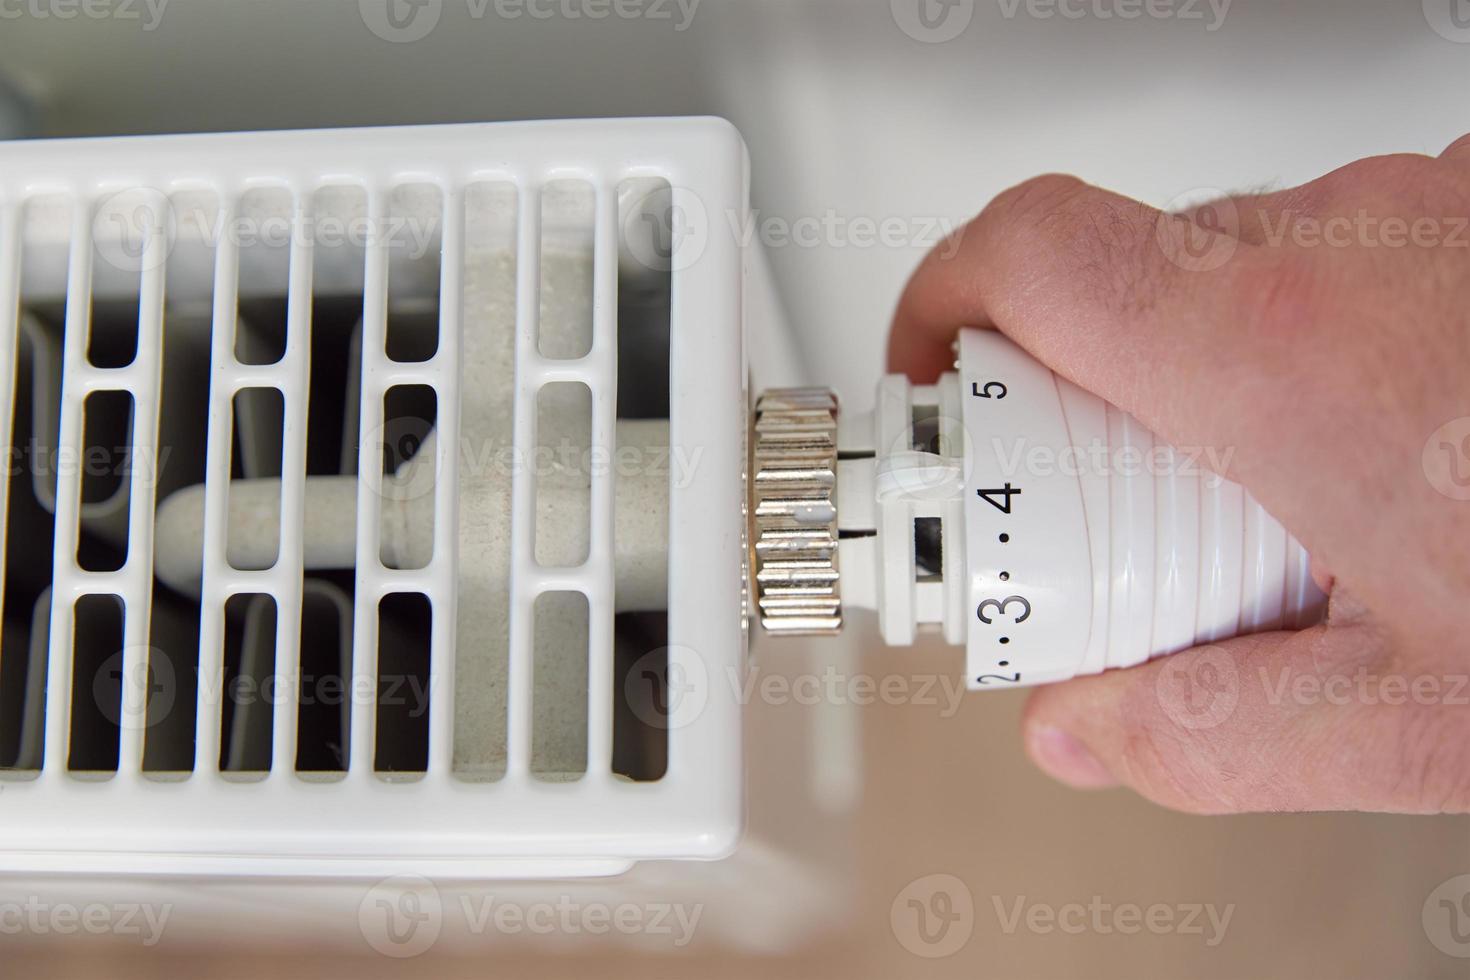 Hand turn heat radiator knob thermostat photo